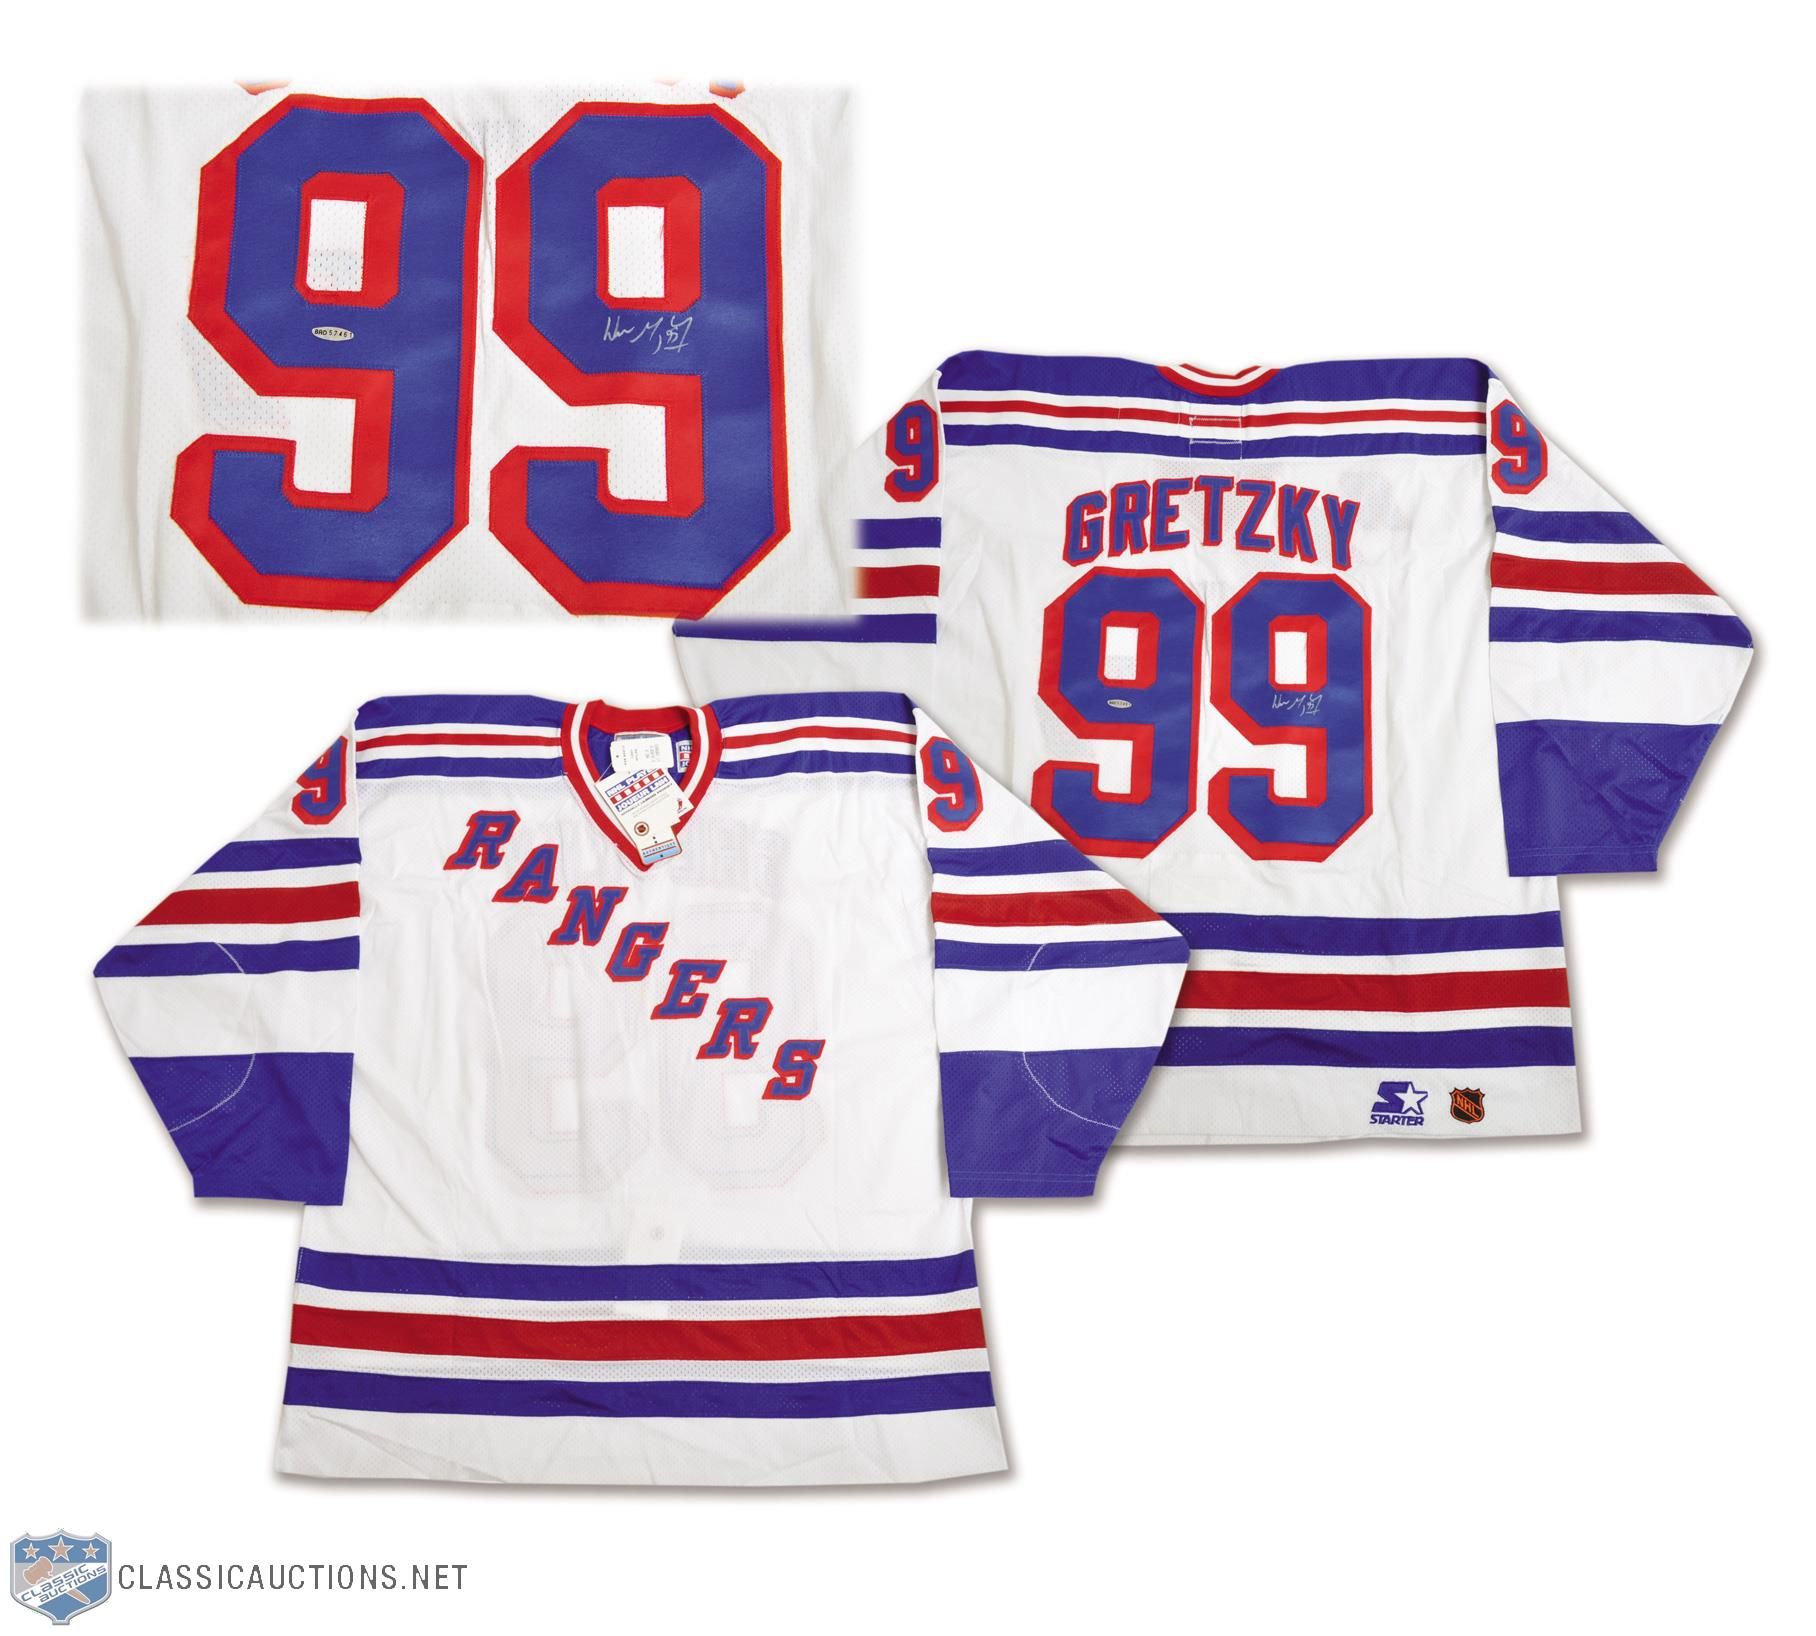 Wayne Gretzky Signed New York Rangers Game Jersey Upper Deck Uda Coa Auction